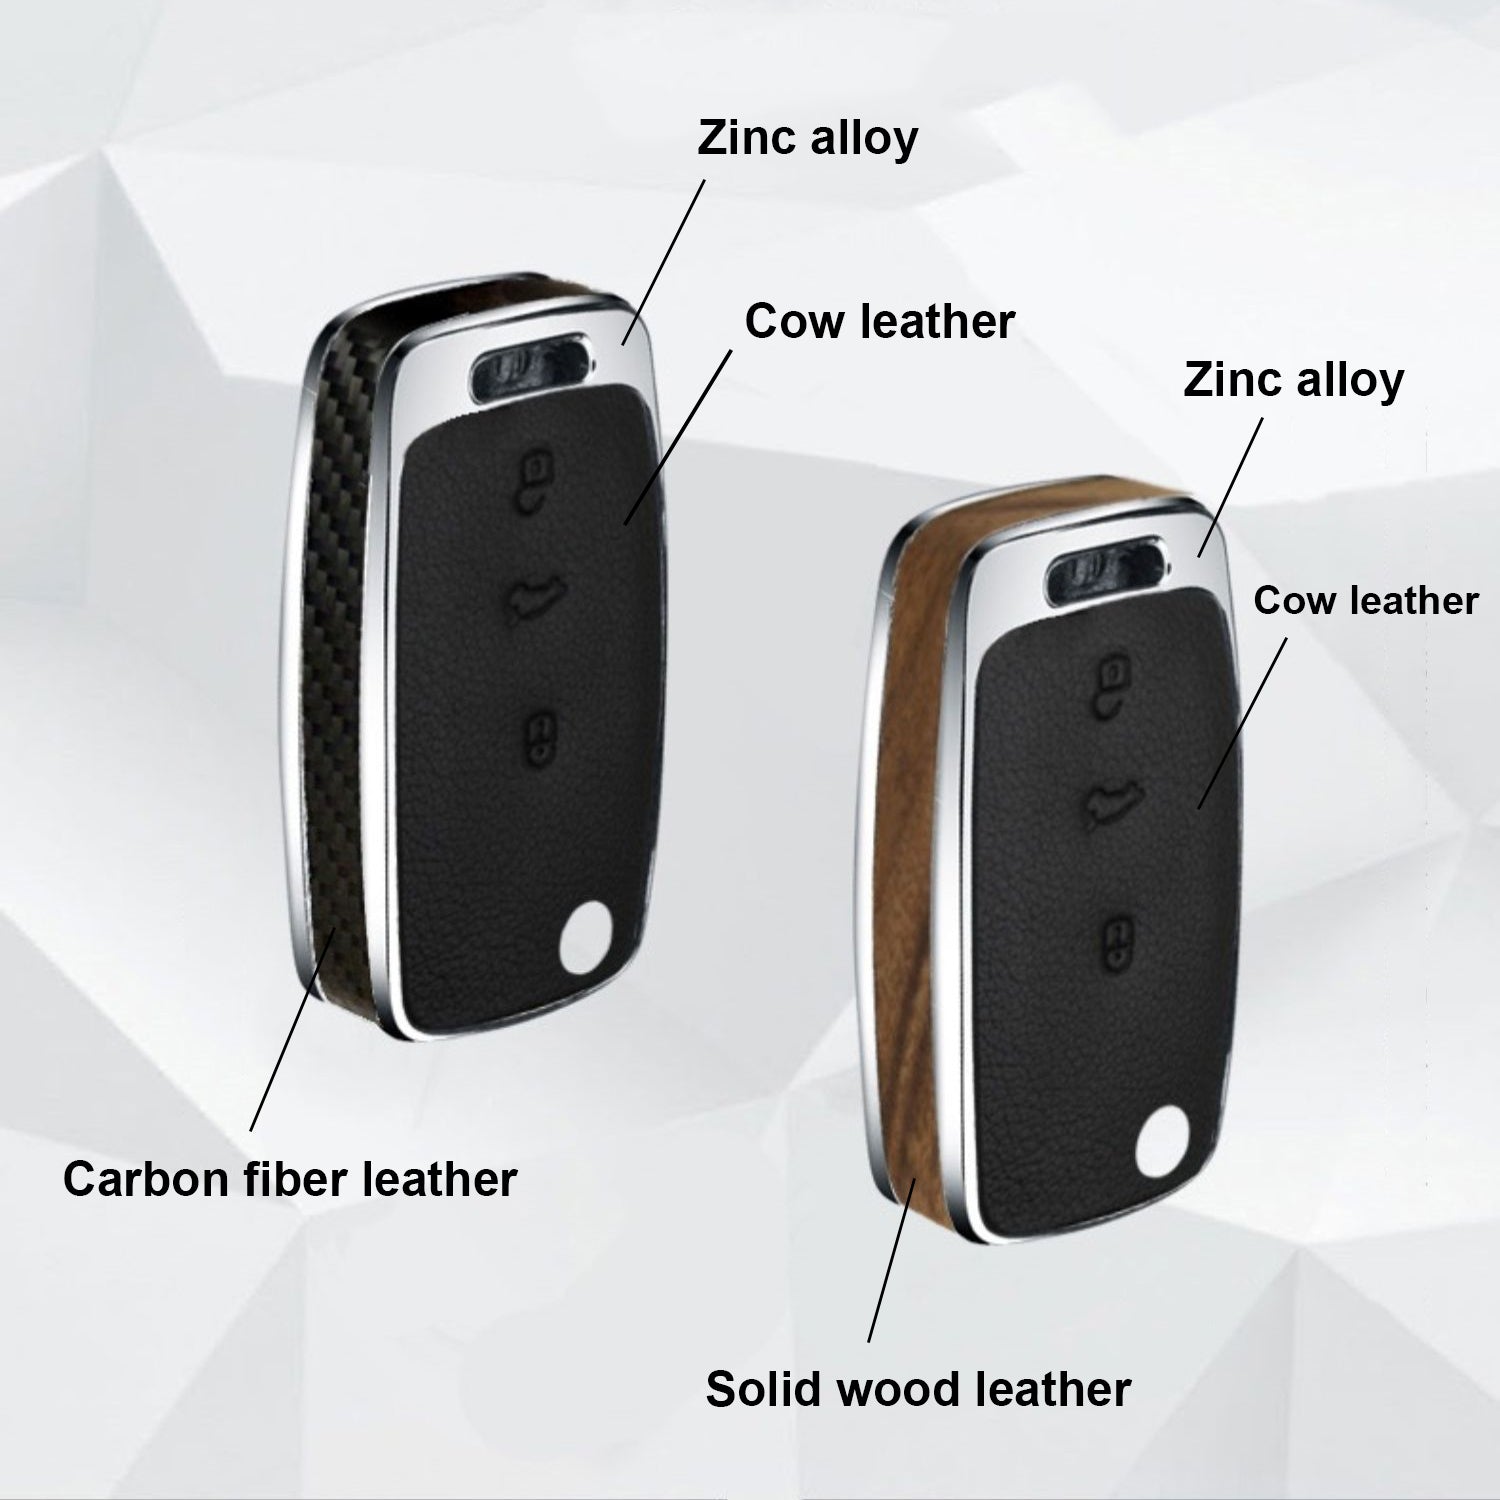 VW Alloy + Leather + Carbon Fiber / Solid Wood Leather Car Key Case